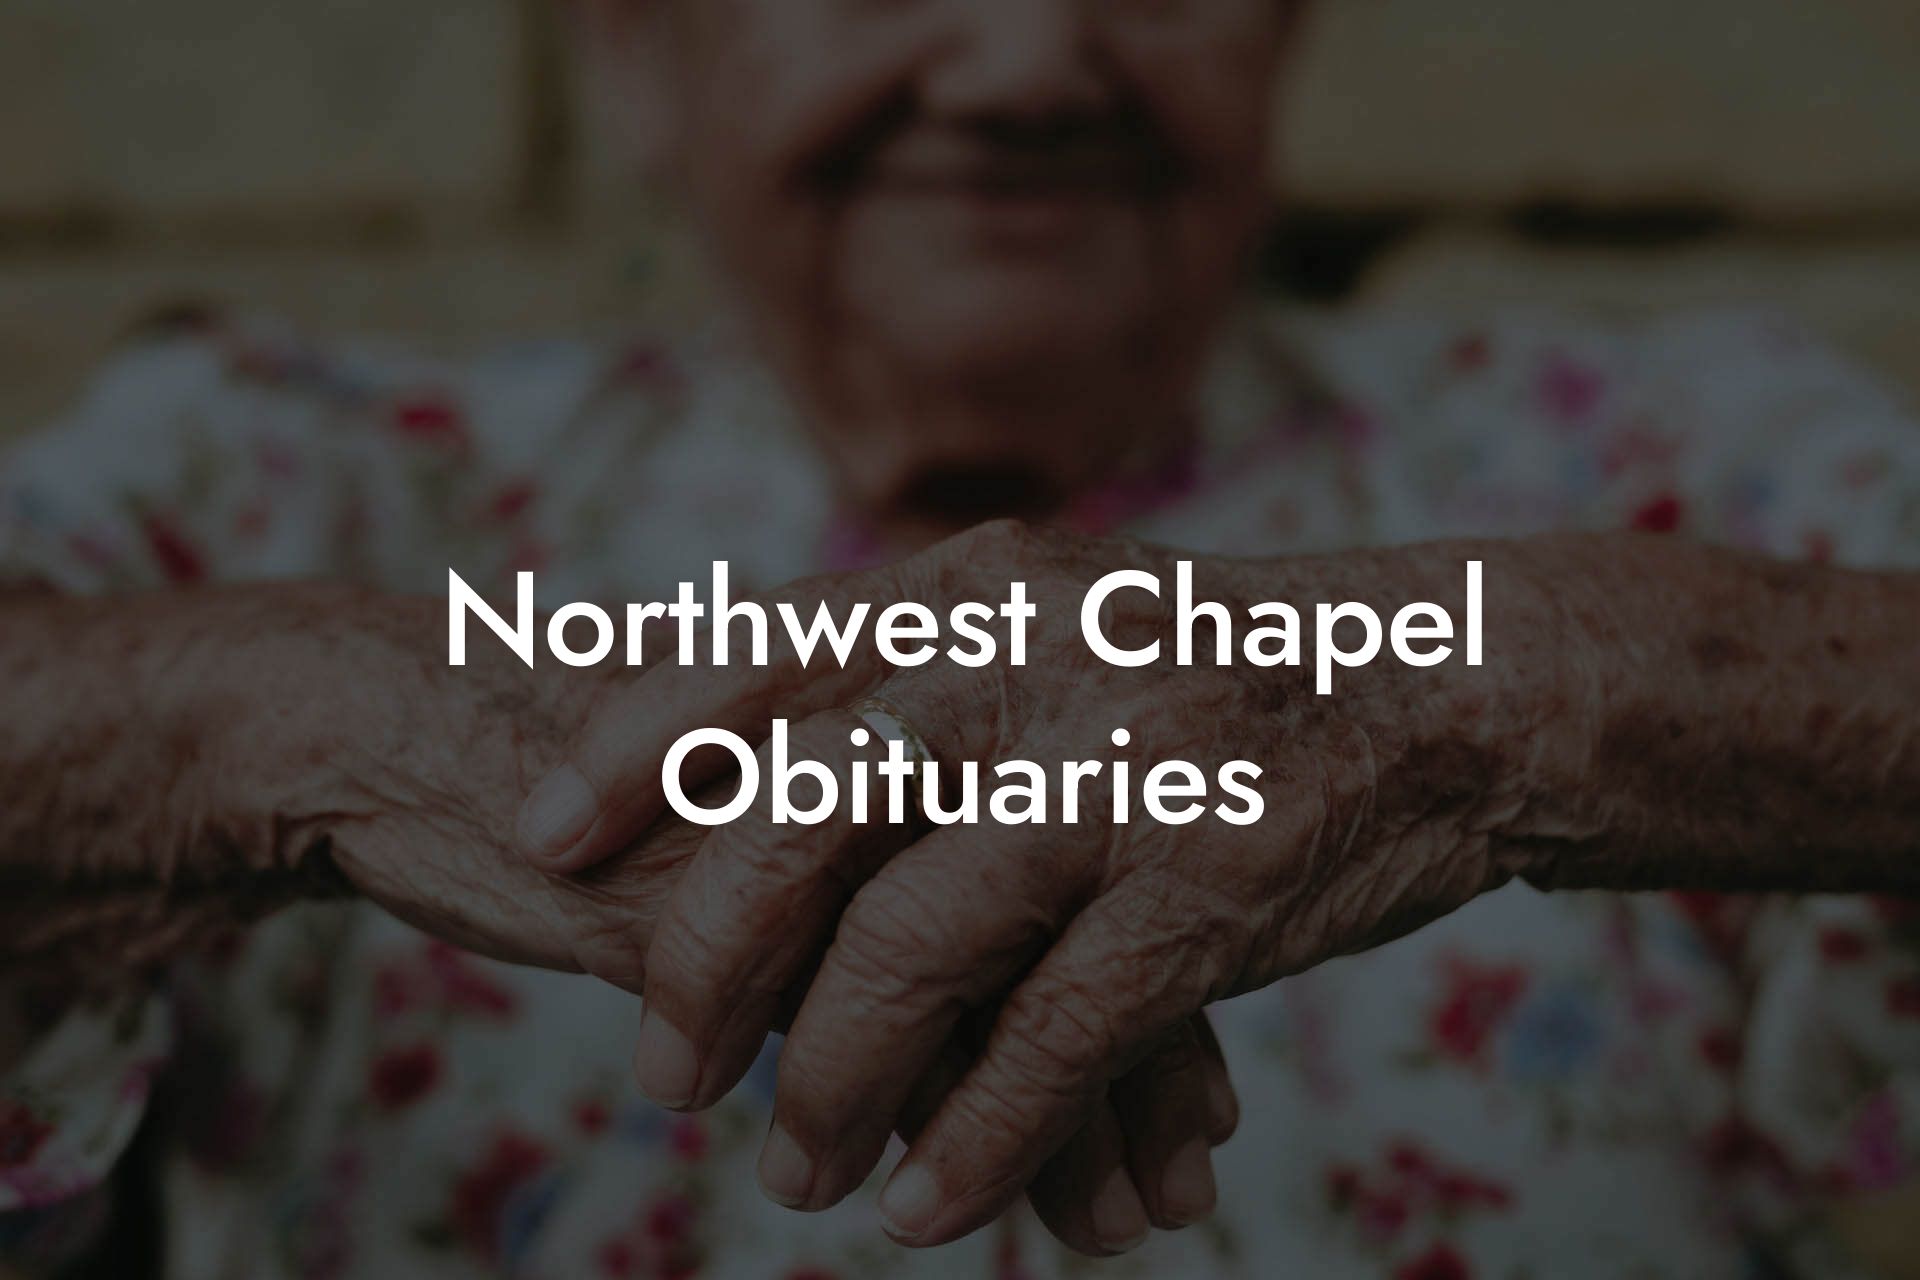 Northwest Chapel Obituaries